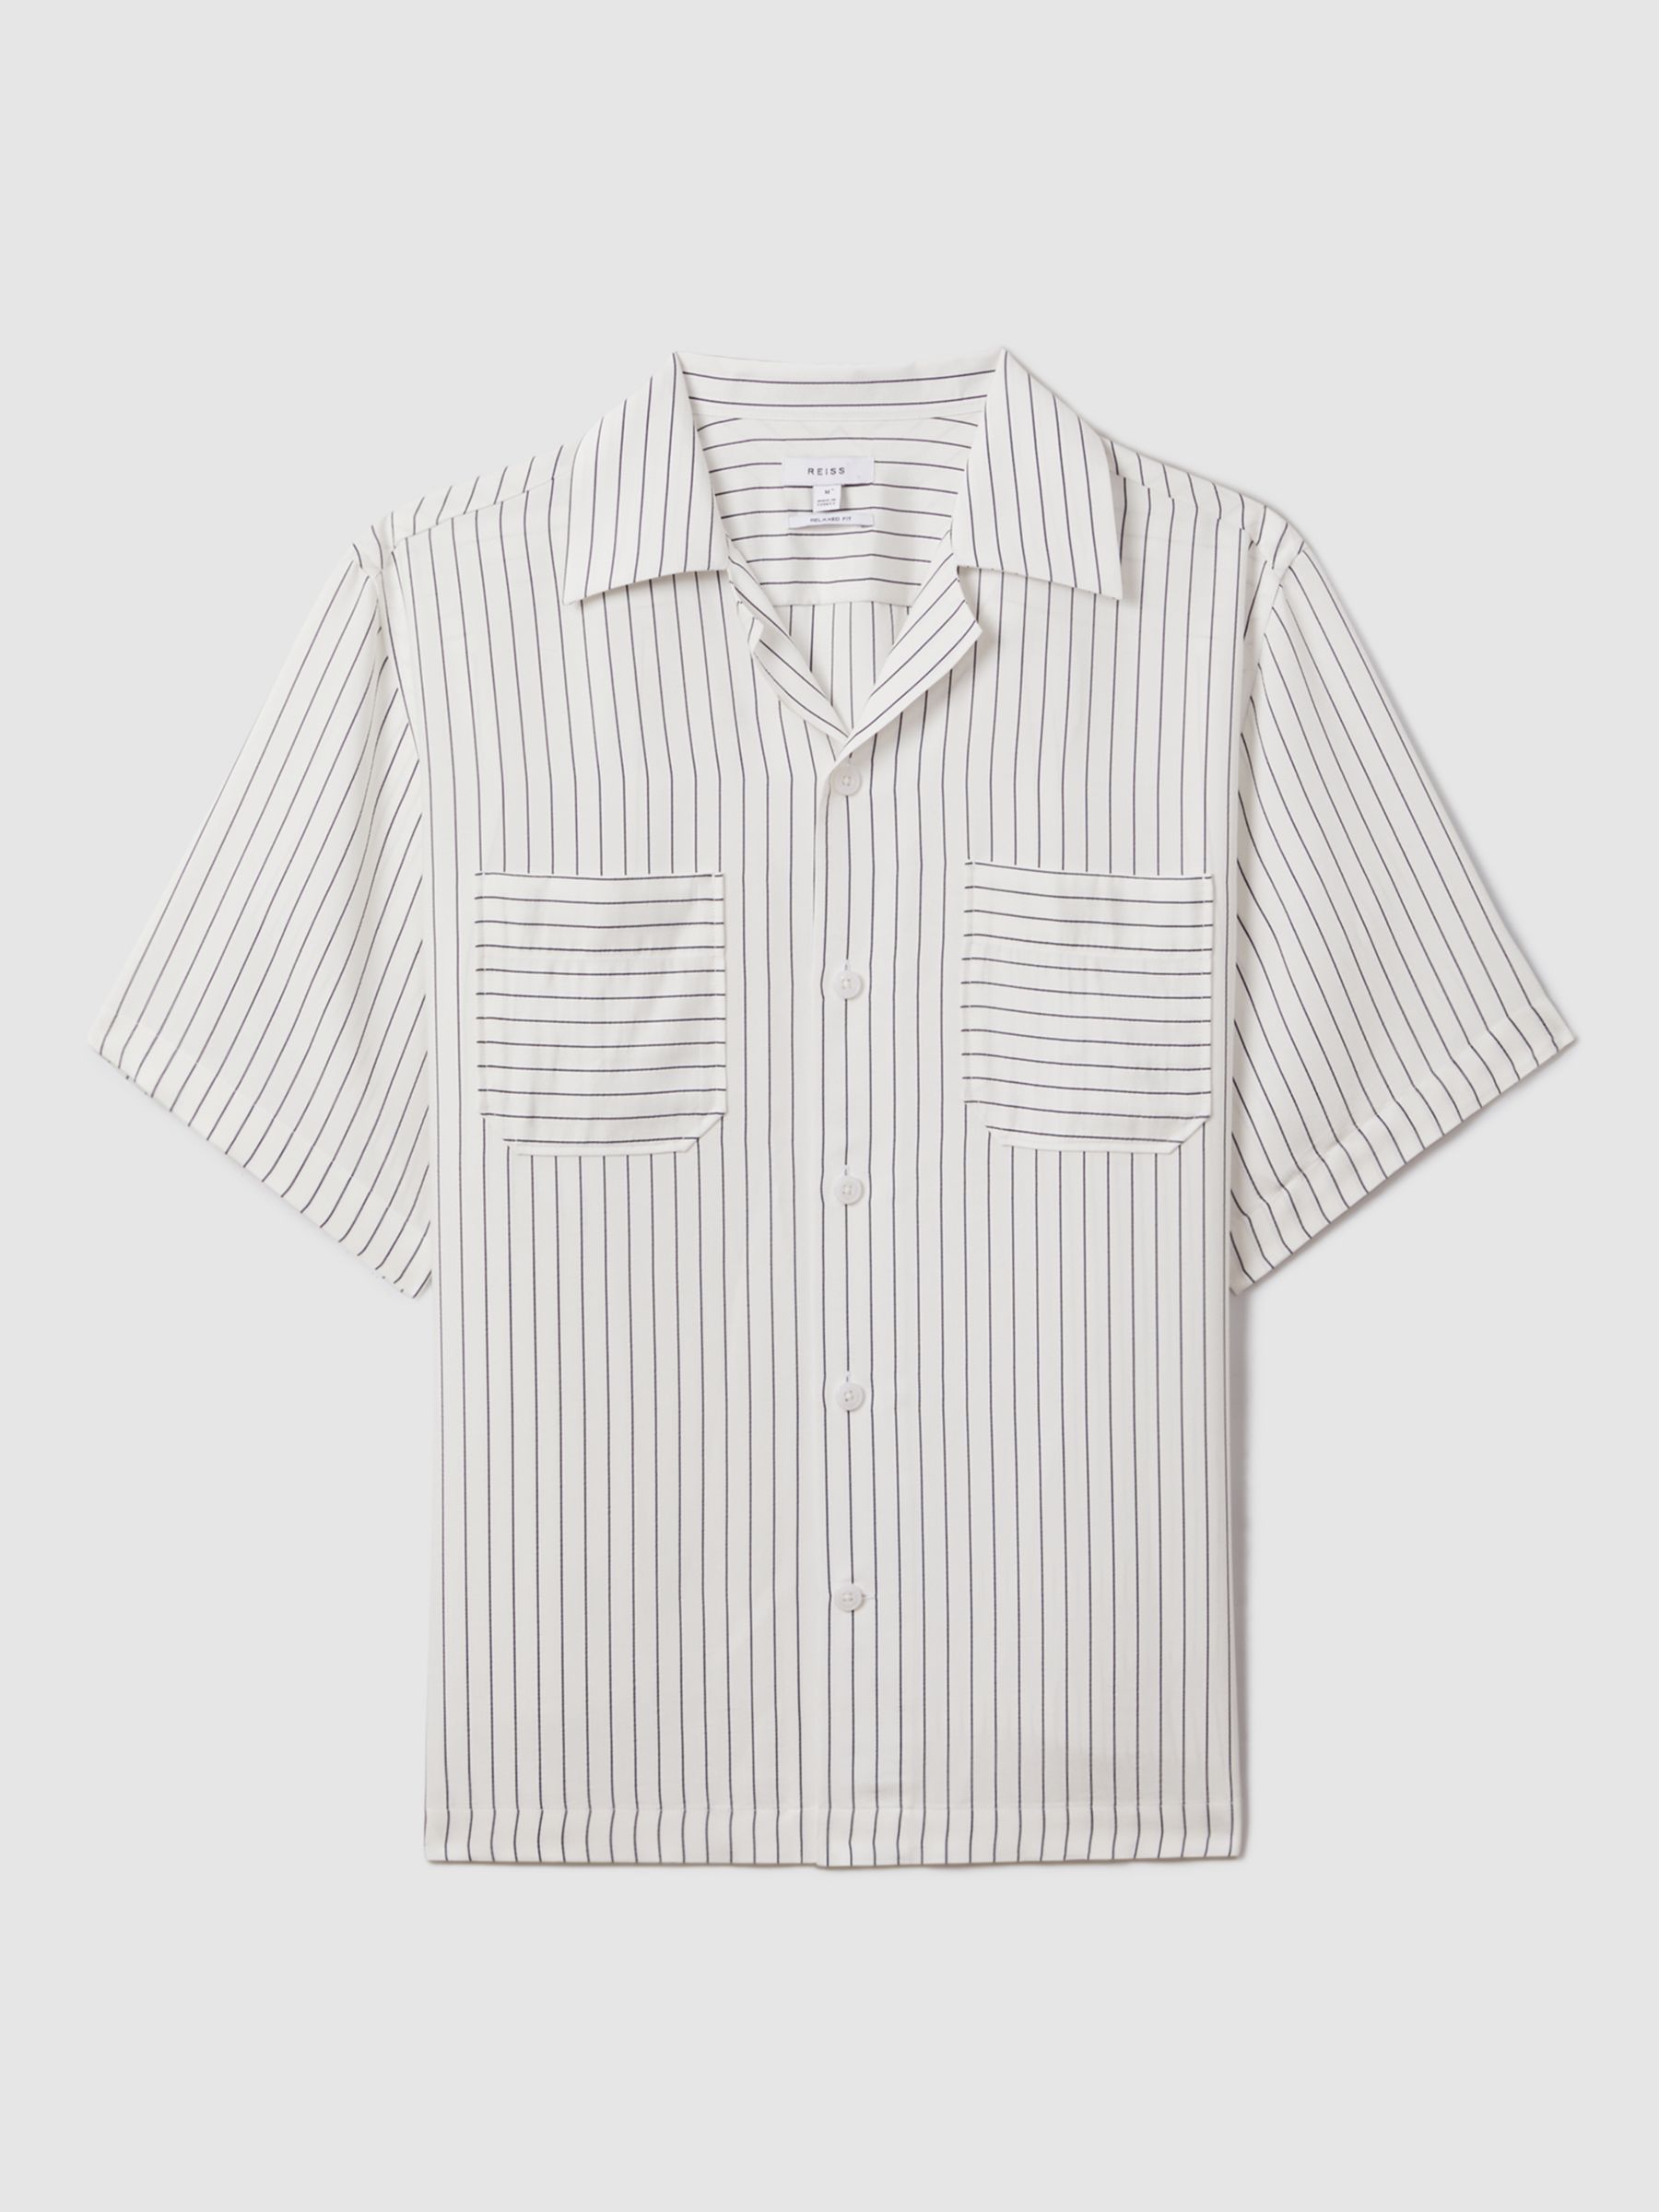 Reiss Anchor Stripe Boxy Shirt, White/Navy, XXL